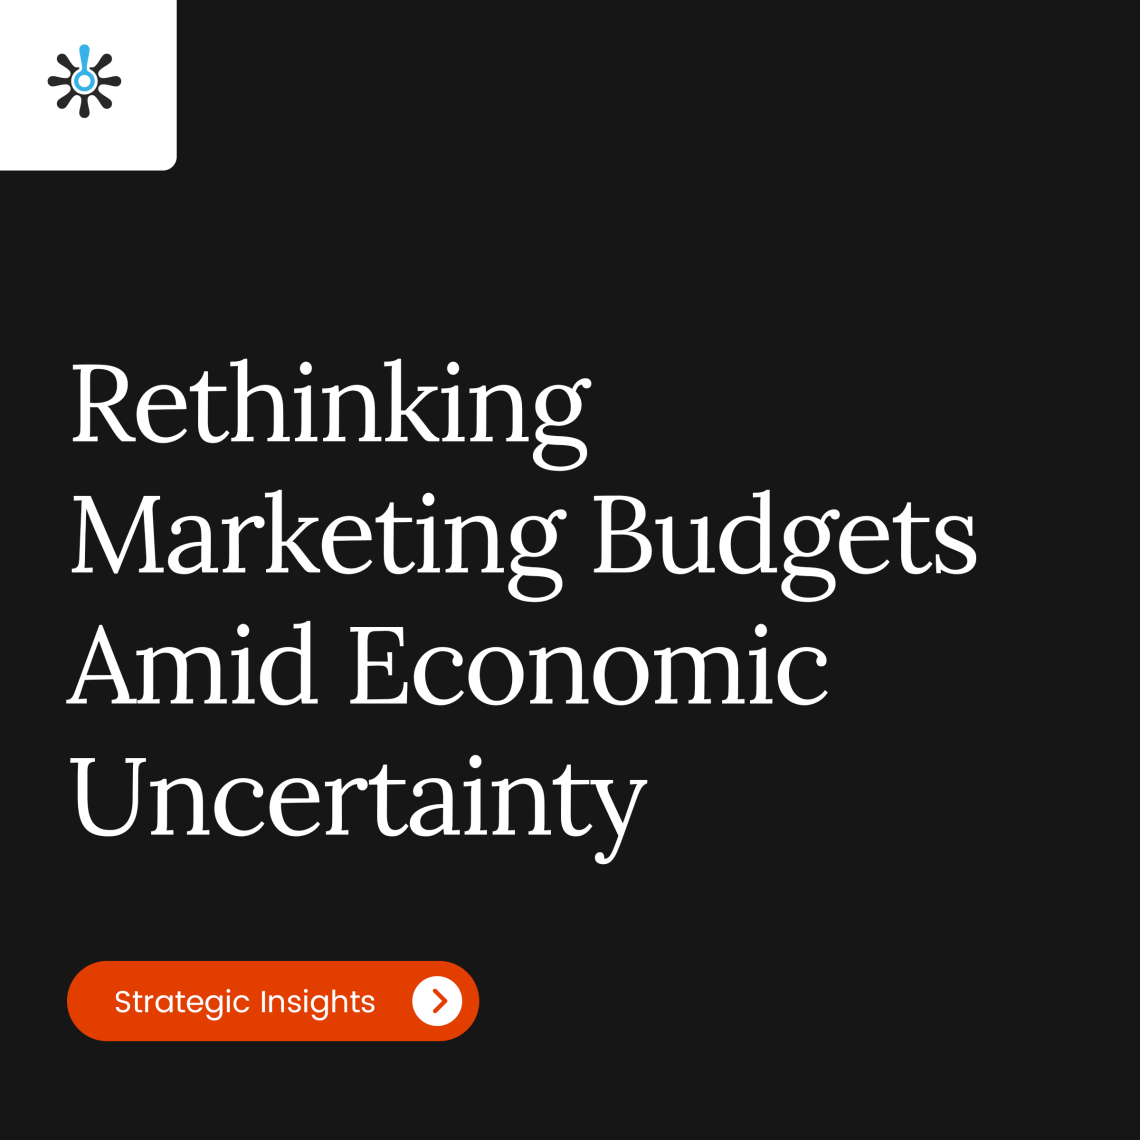 Title Page Reading "Rethinking Marketing Budgets Amid Economic Uncertainty"